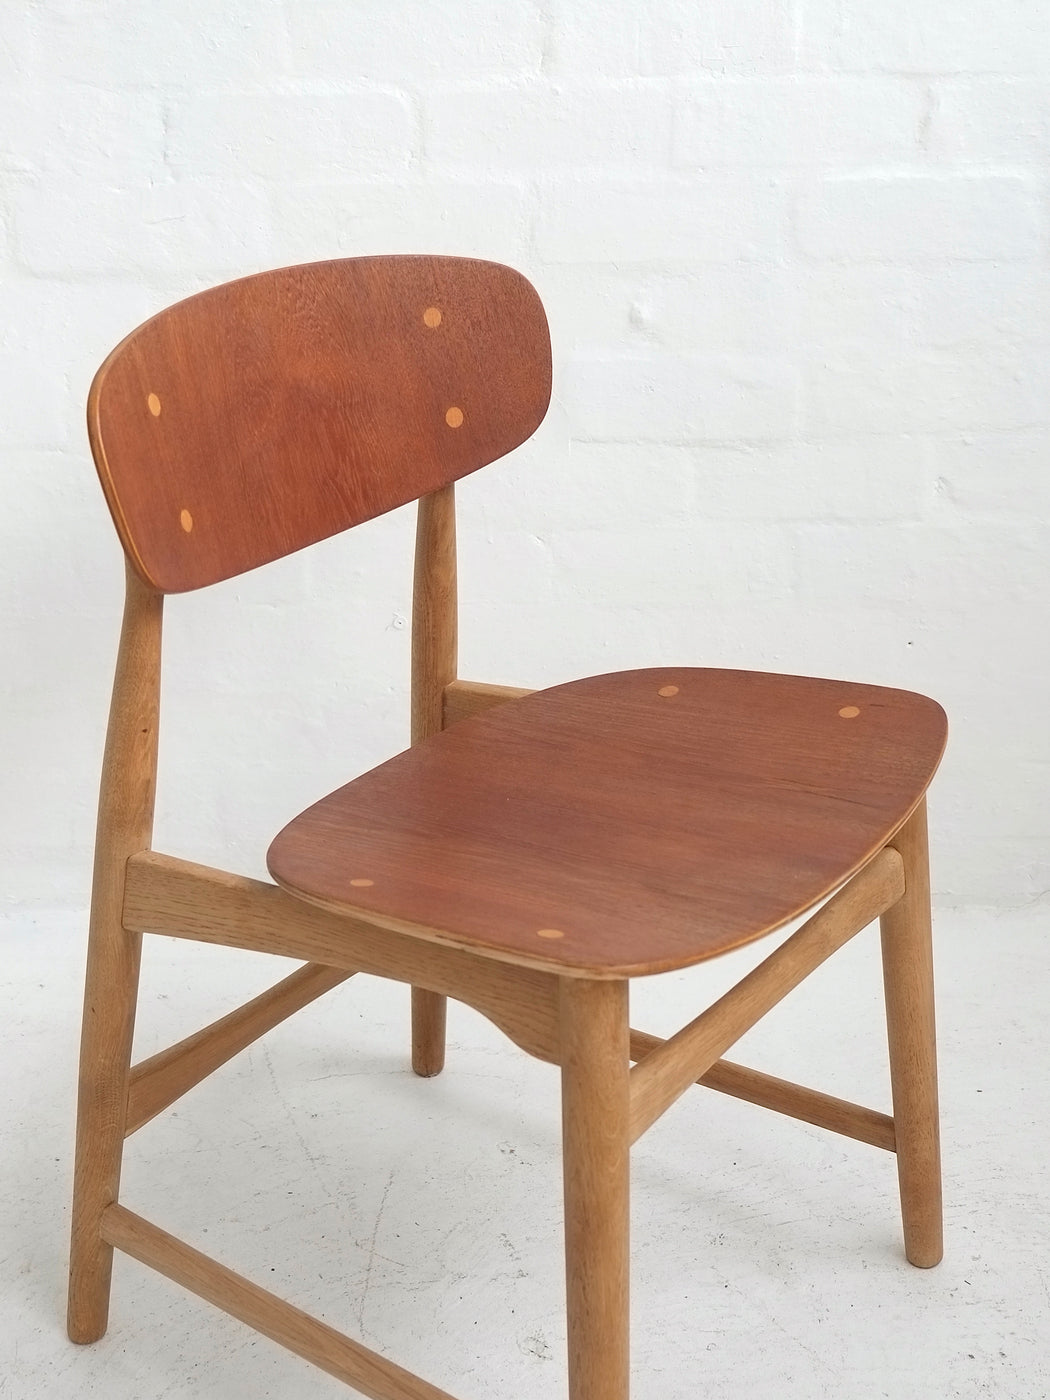 Jens Hjorth 'Model 308' Chair